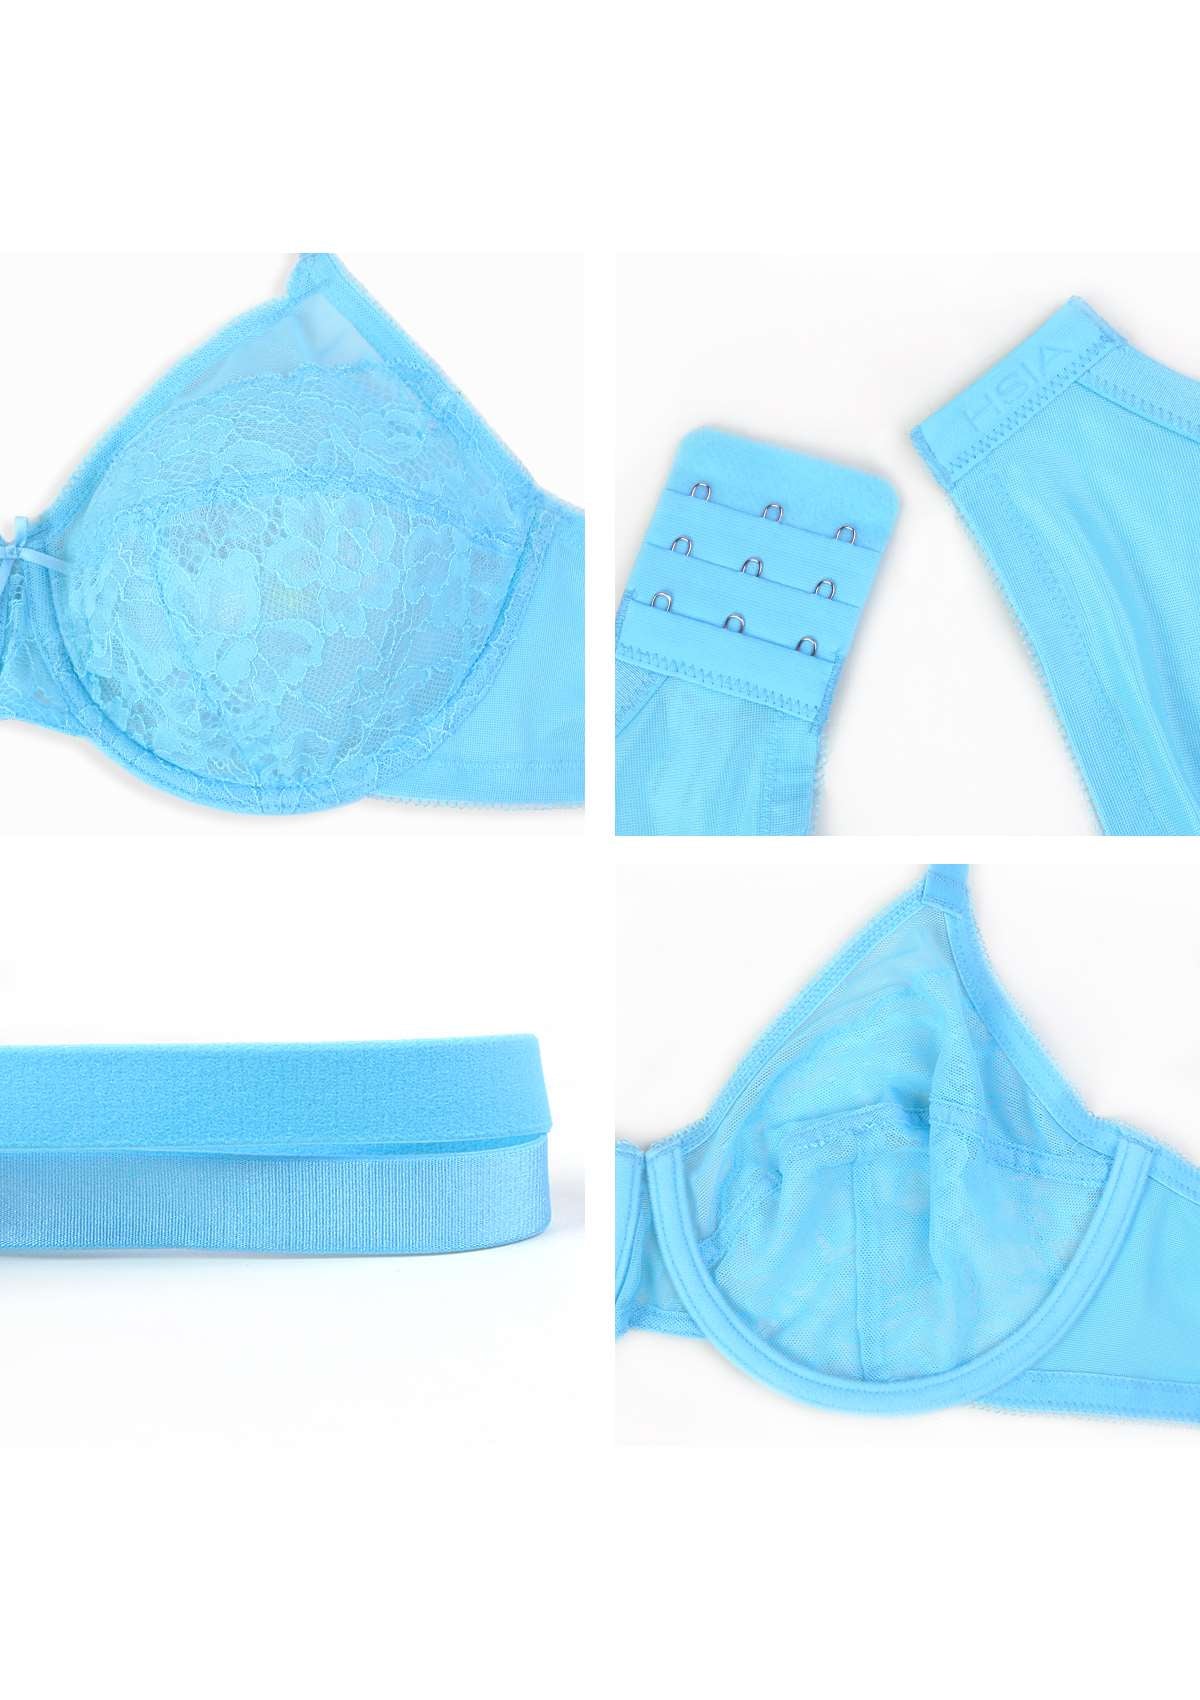 HSIA Enchante Minimizer Lace Bra: Full Support For Heavy Breasts - Capri Blue / 42 / C